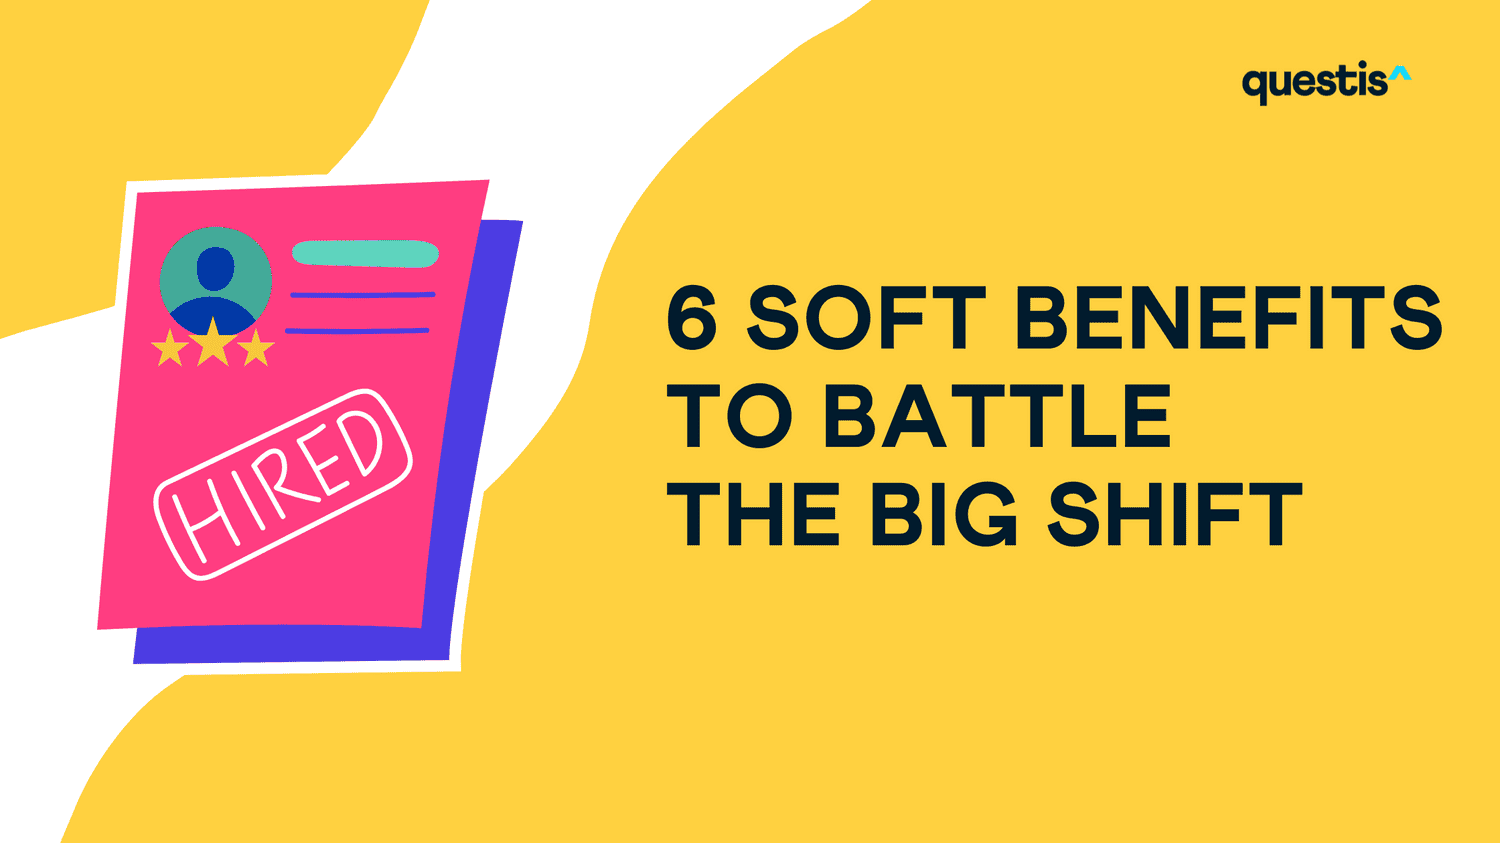 6 Soft Benefits to Battle ‘The Big Shift’